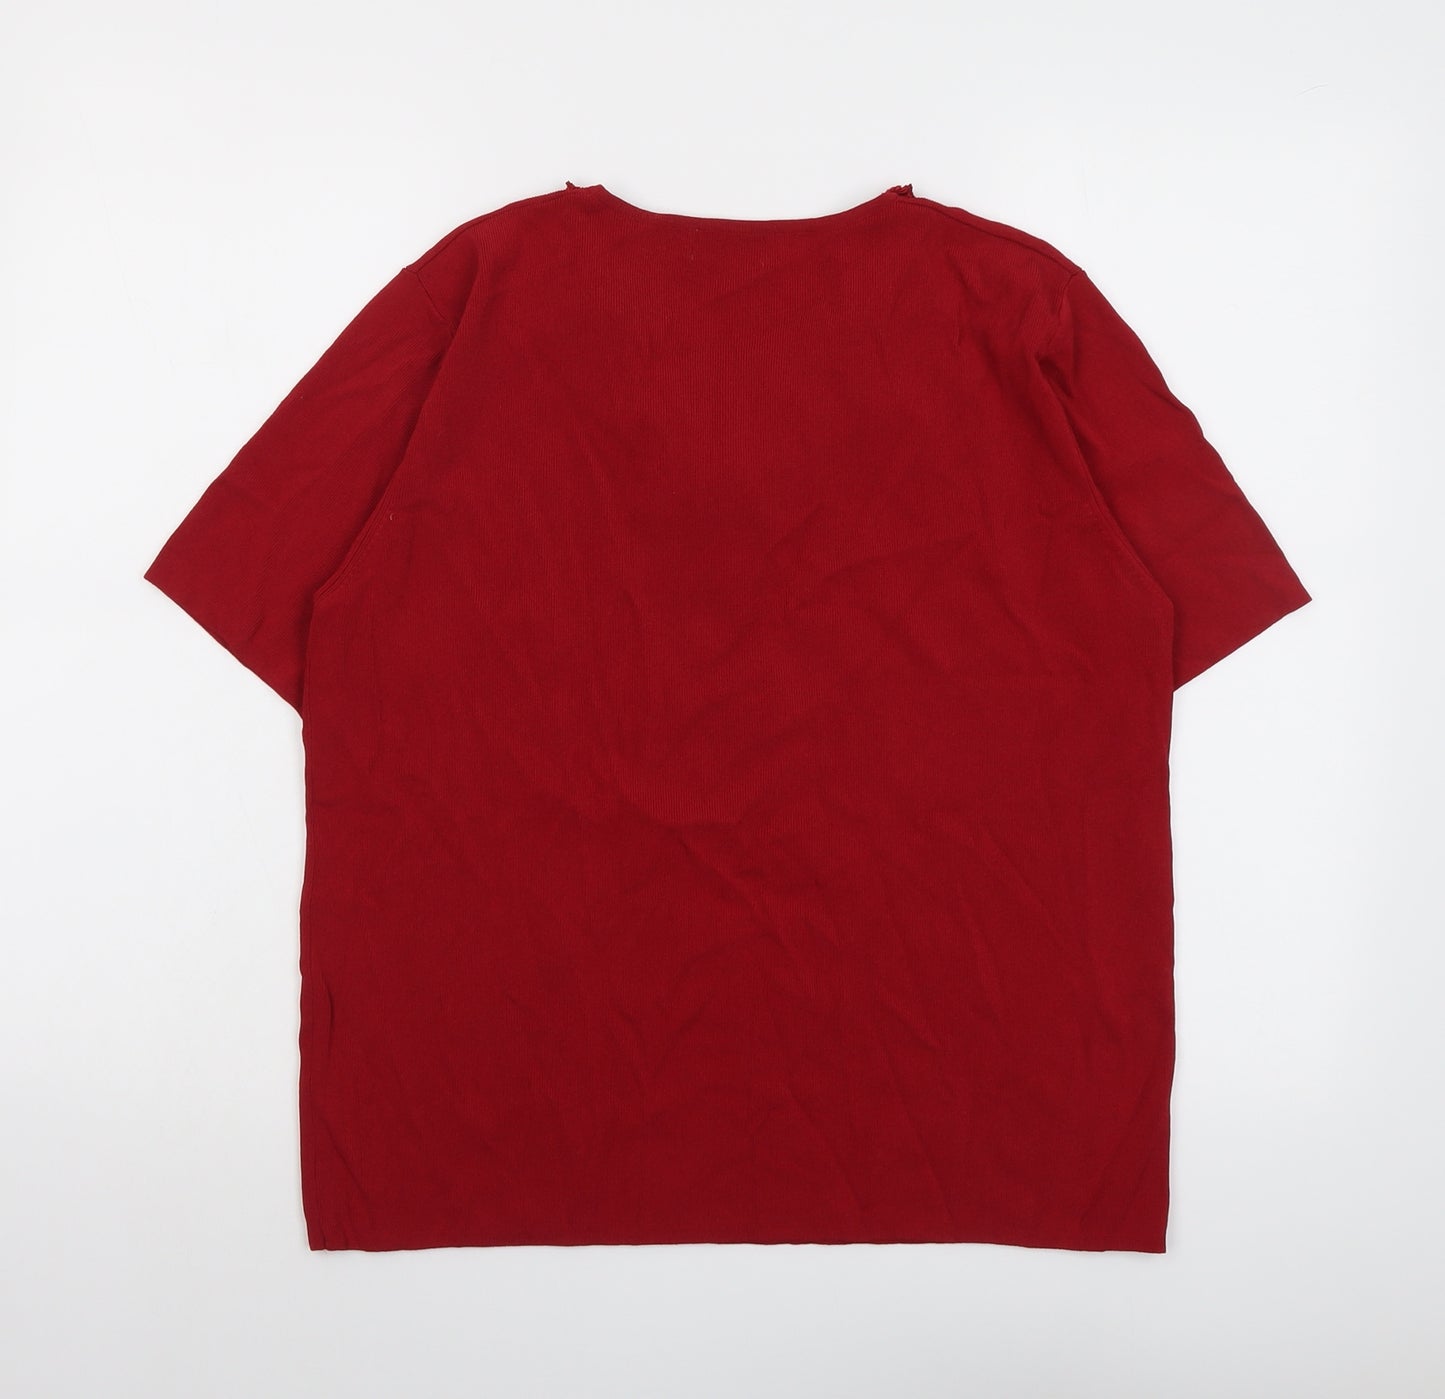 Talisa Womens Red V-Neck Viscose Pullover Jumper Size 14